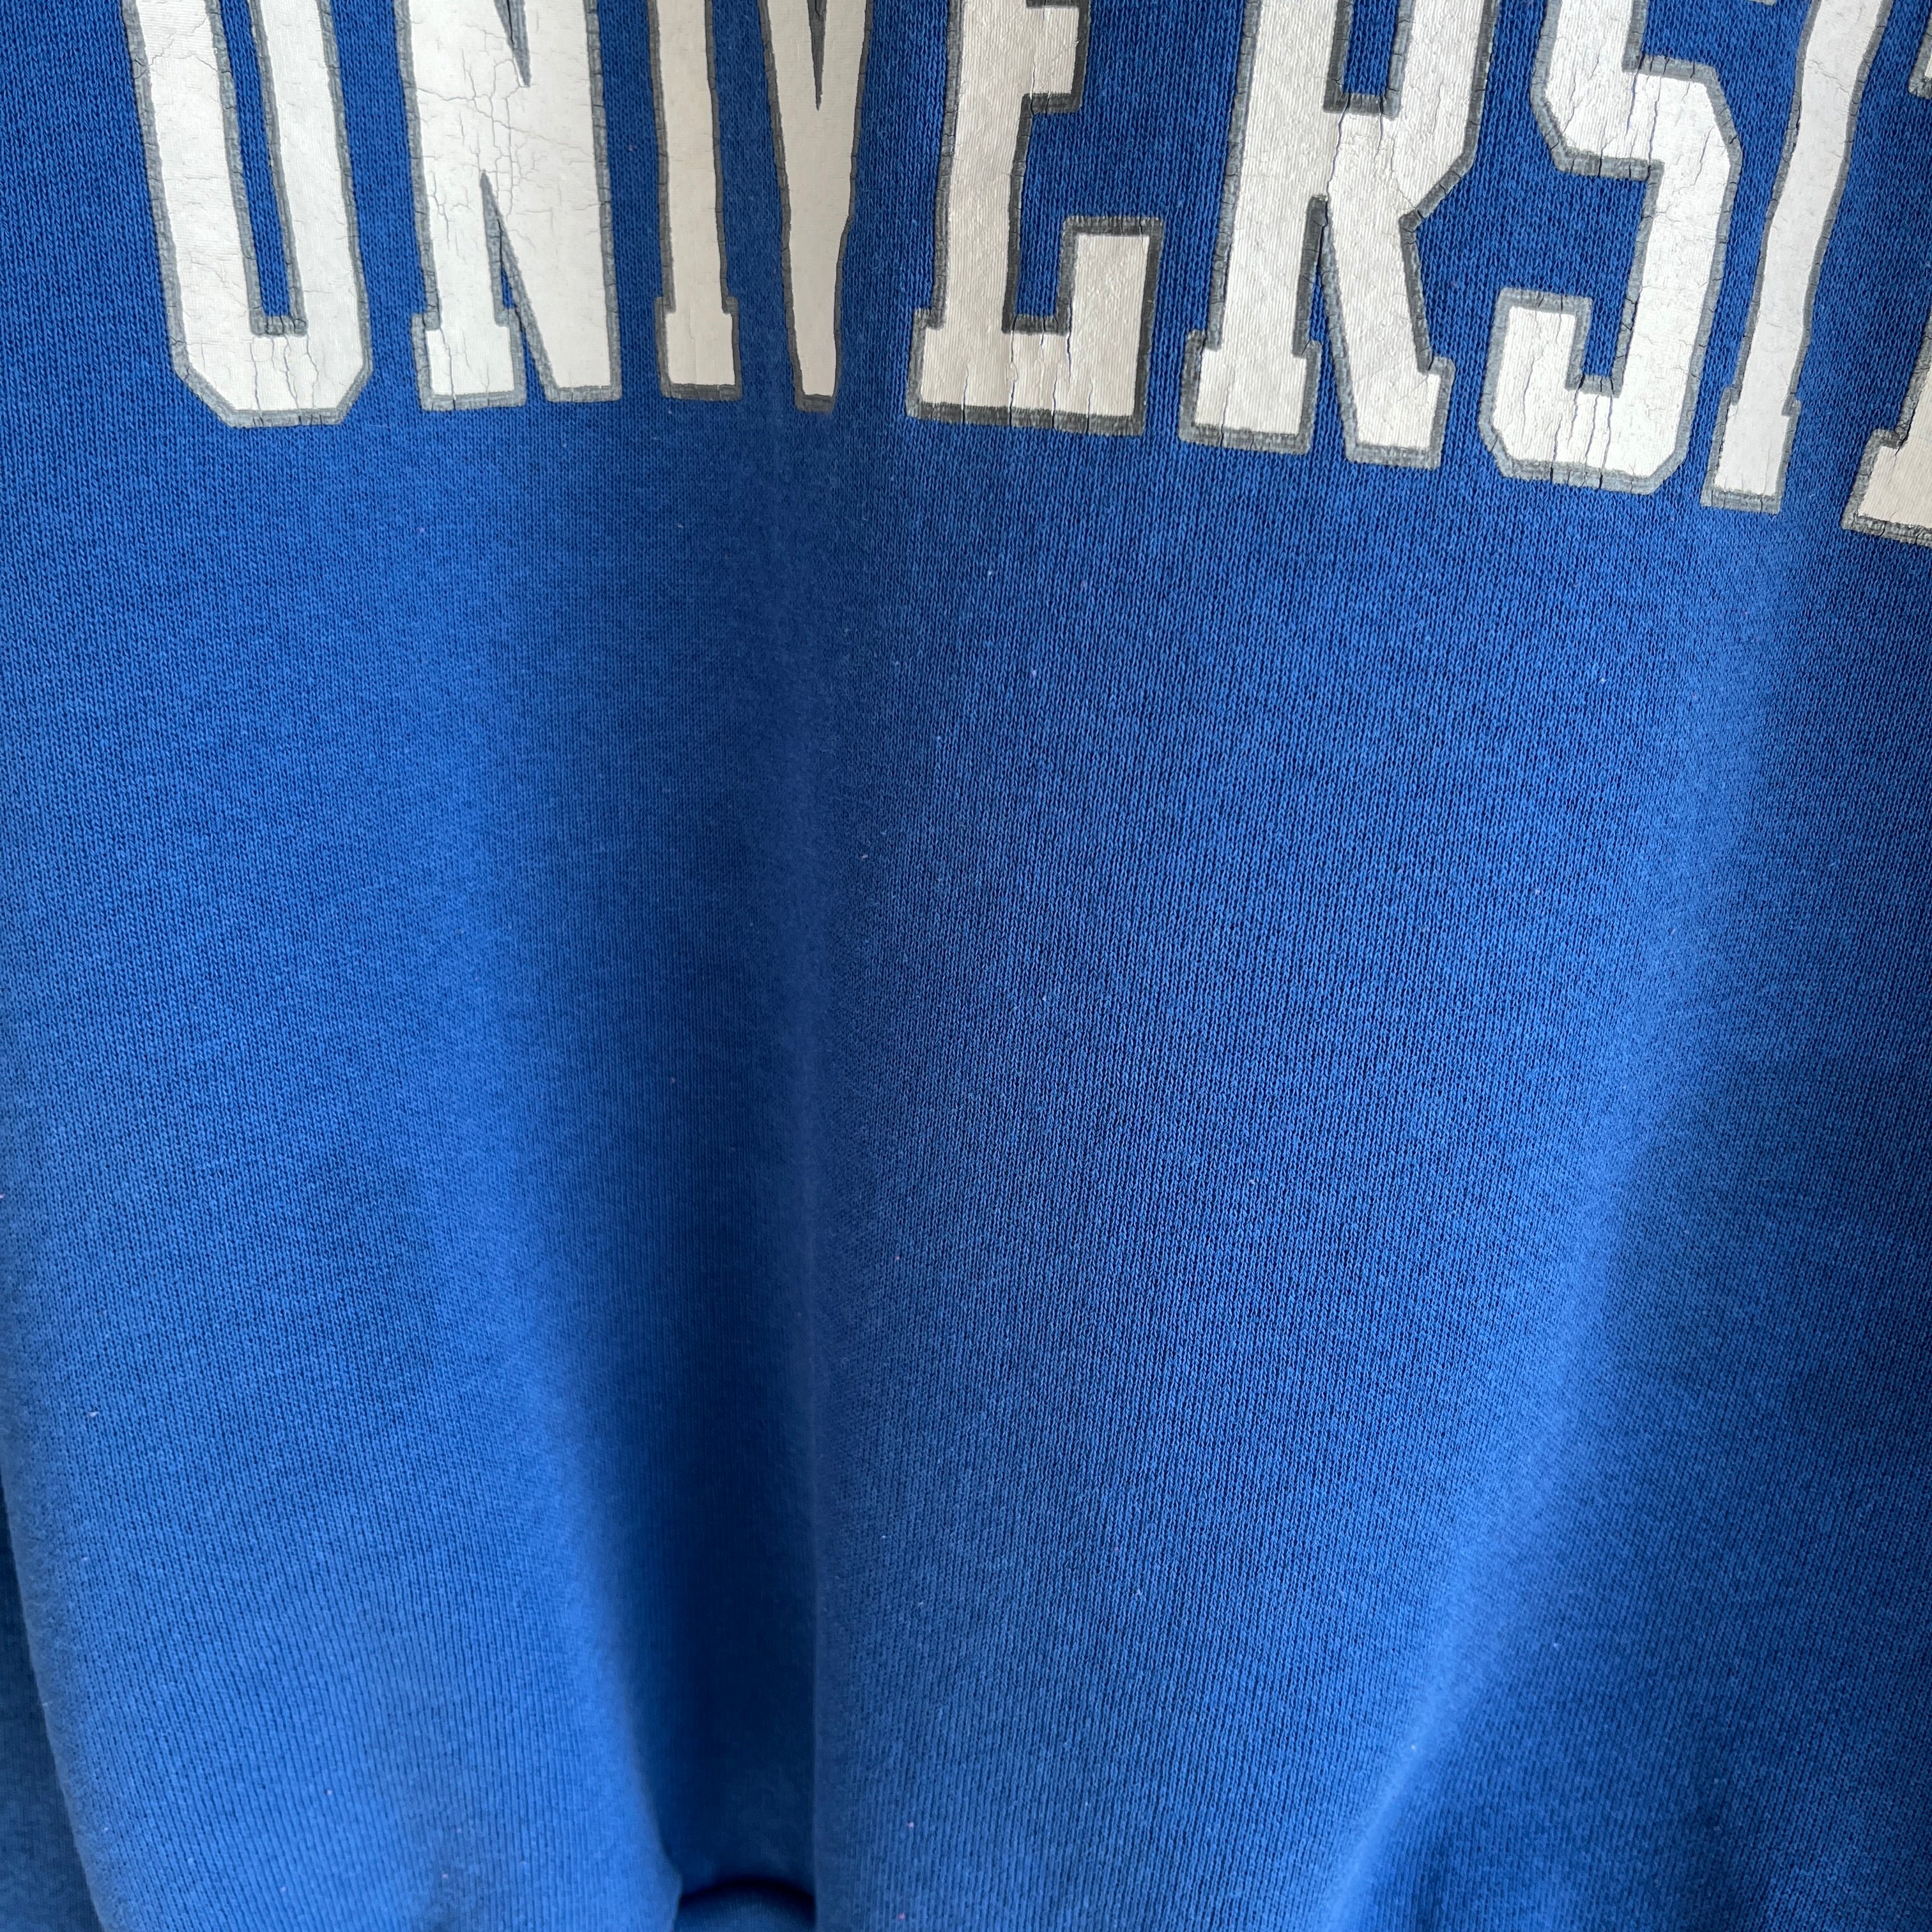 1990s Seton Hall University Sweatshirt by Jansport